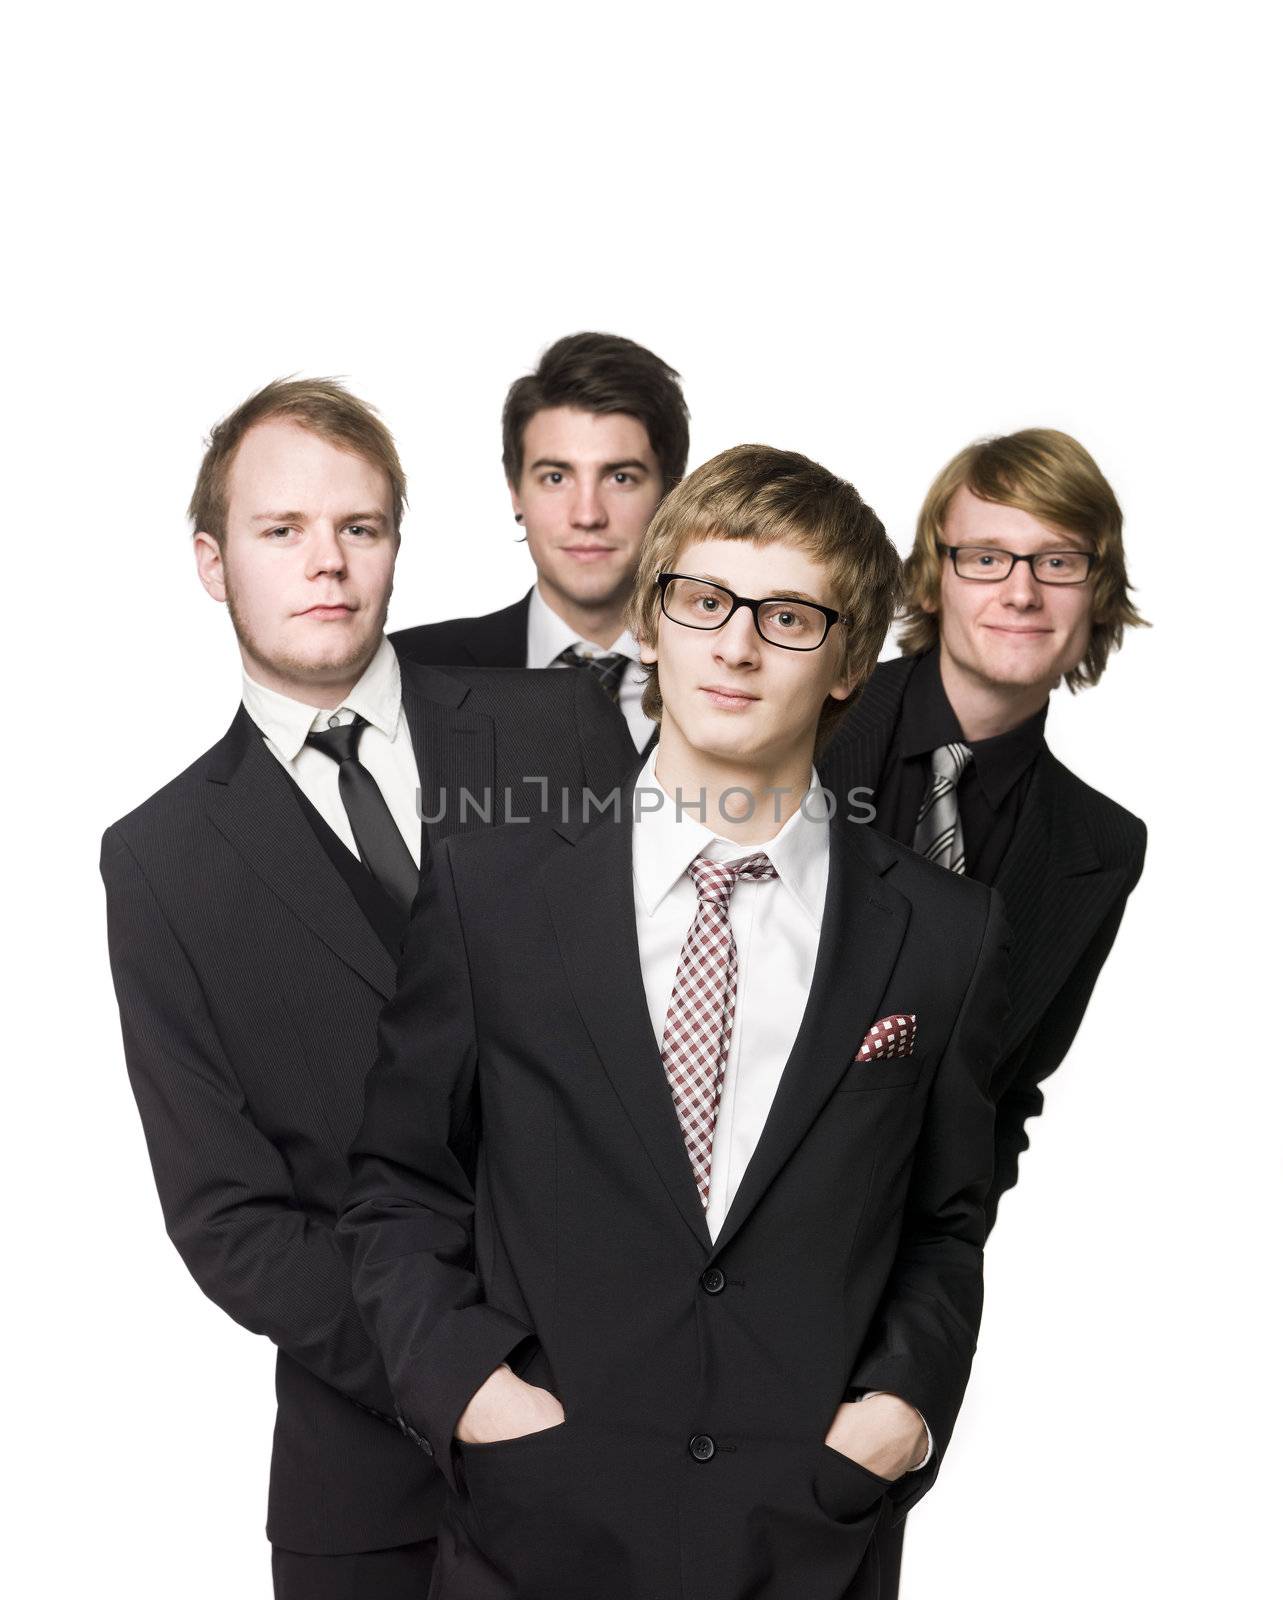 Four men with suits by gemenacom